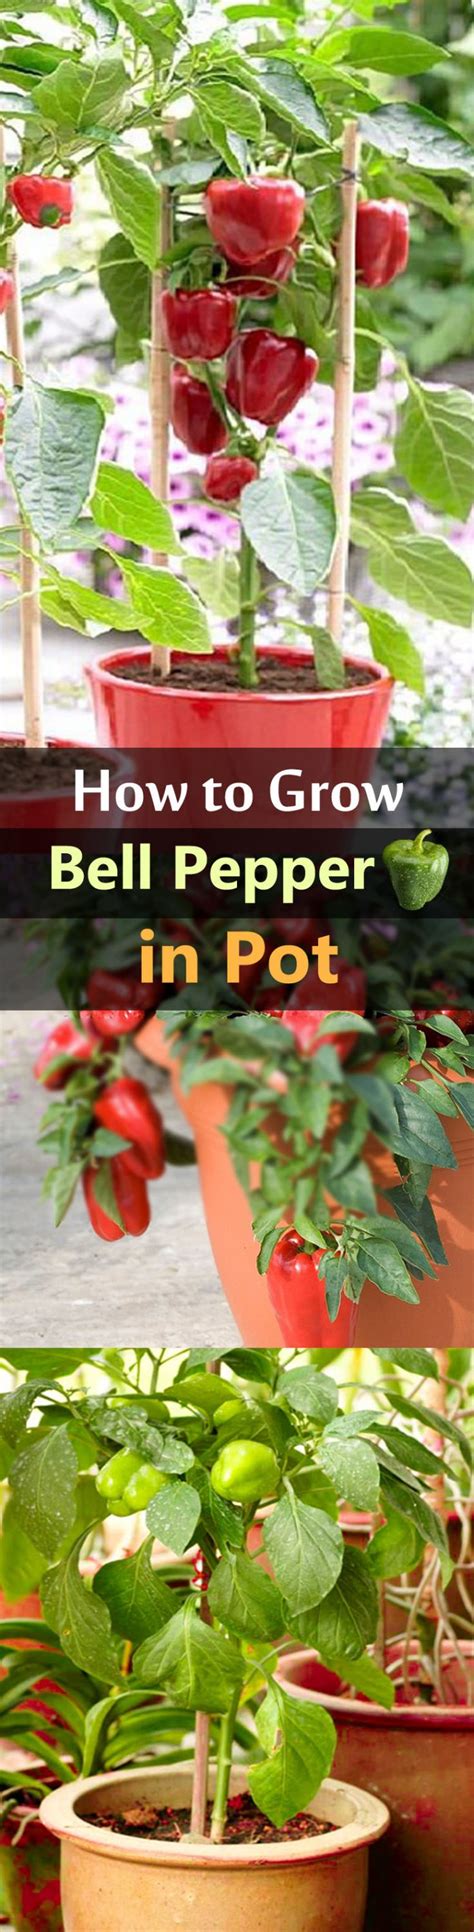 How To Grow Bell Peppers In Pots Home Design Garden